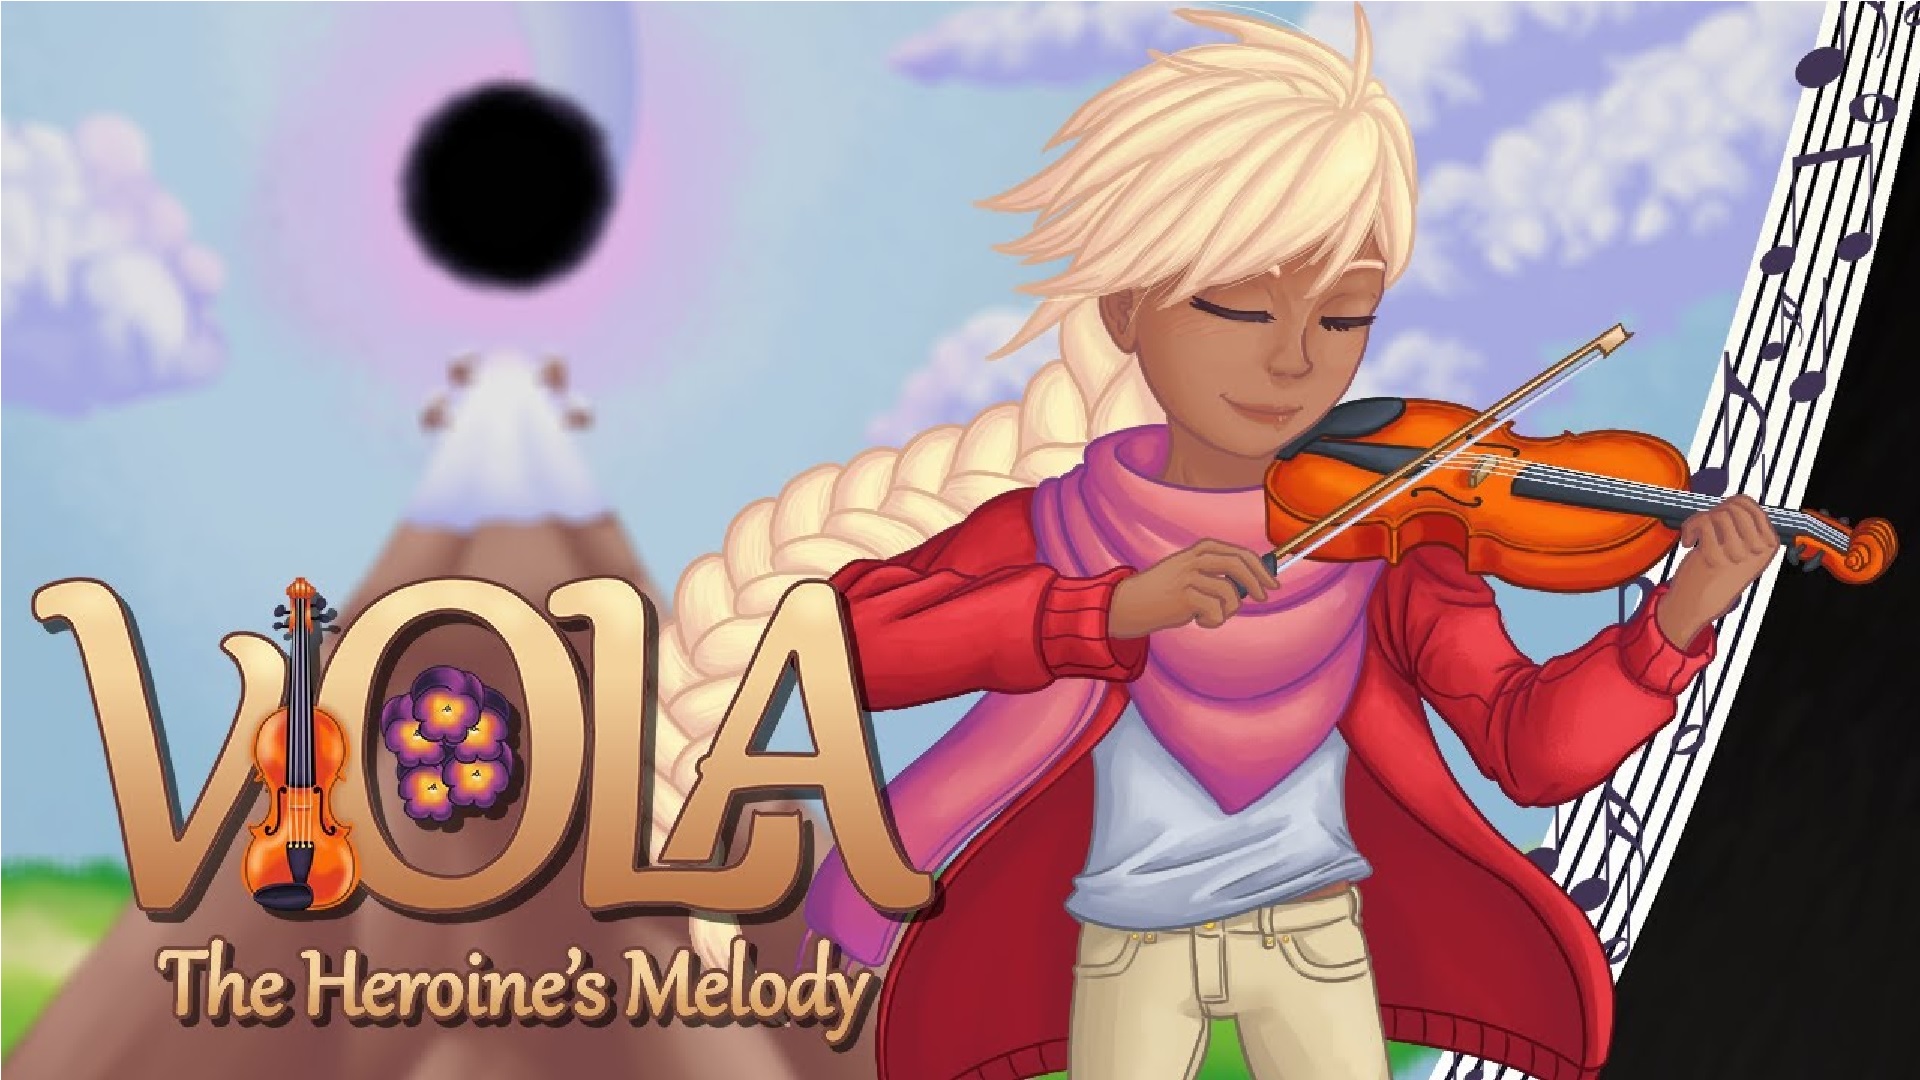 Viola: The Heroine’s Melody | A Melodia do dia